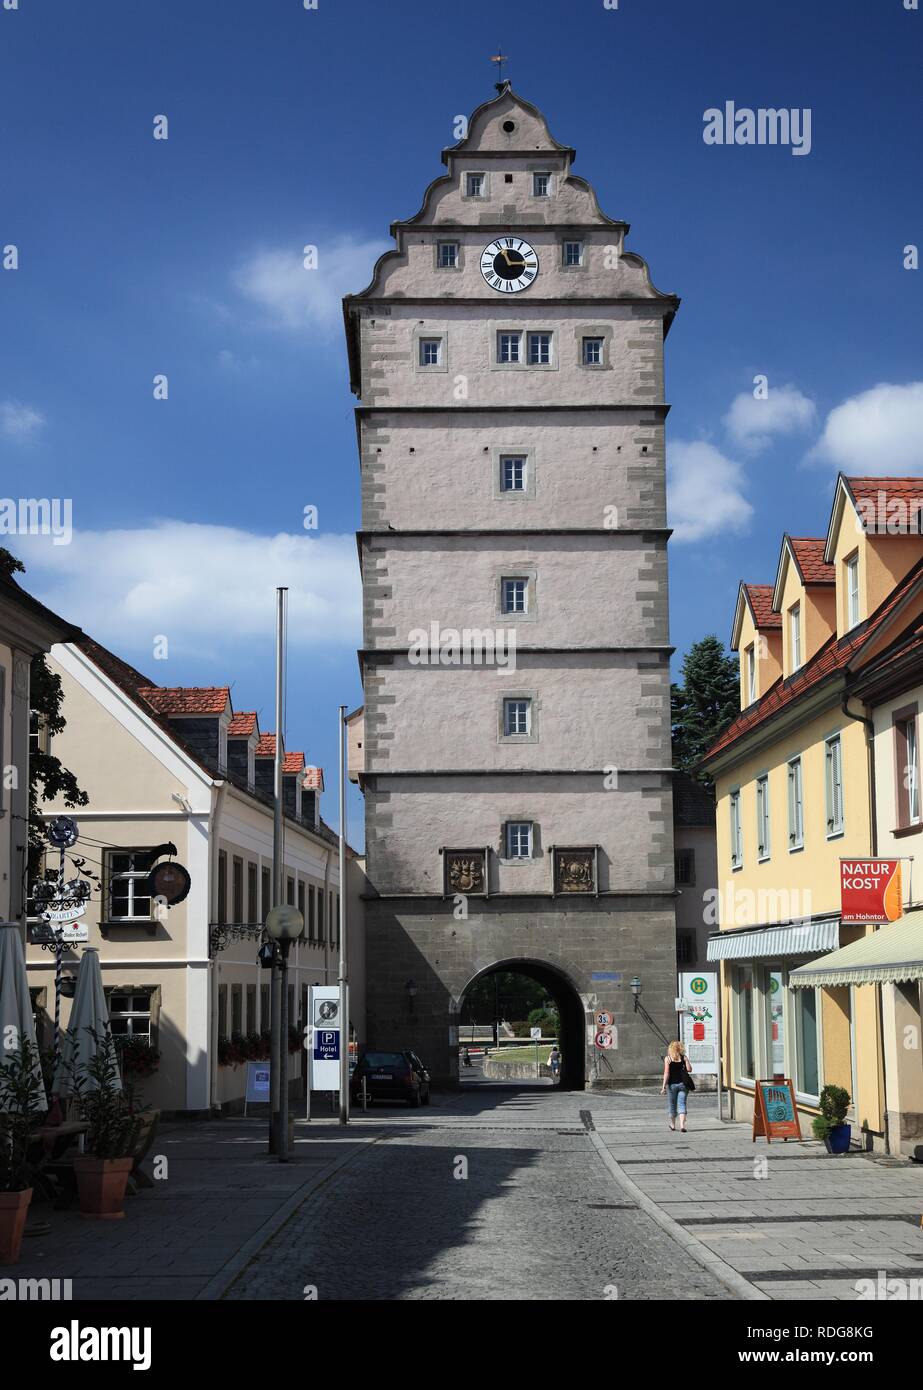 Gate Hohntor tower, Bad Neustadt an der Saale, Landkreis Rhoen-Grabfeld distretto, bassa Franconia, Bavaria Foto Stock